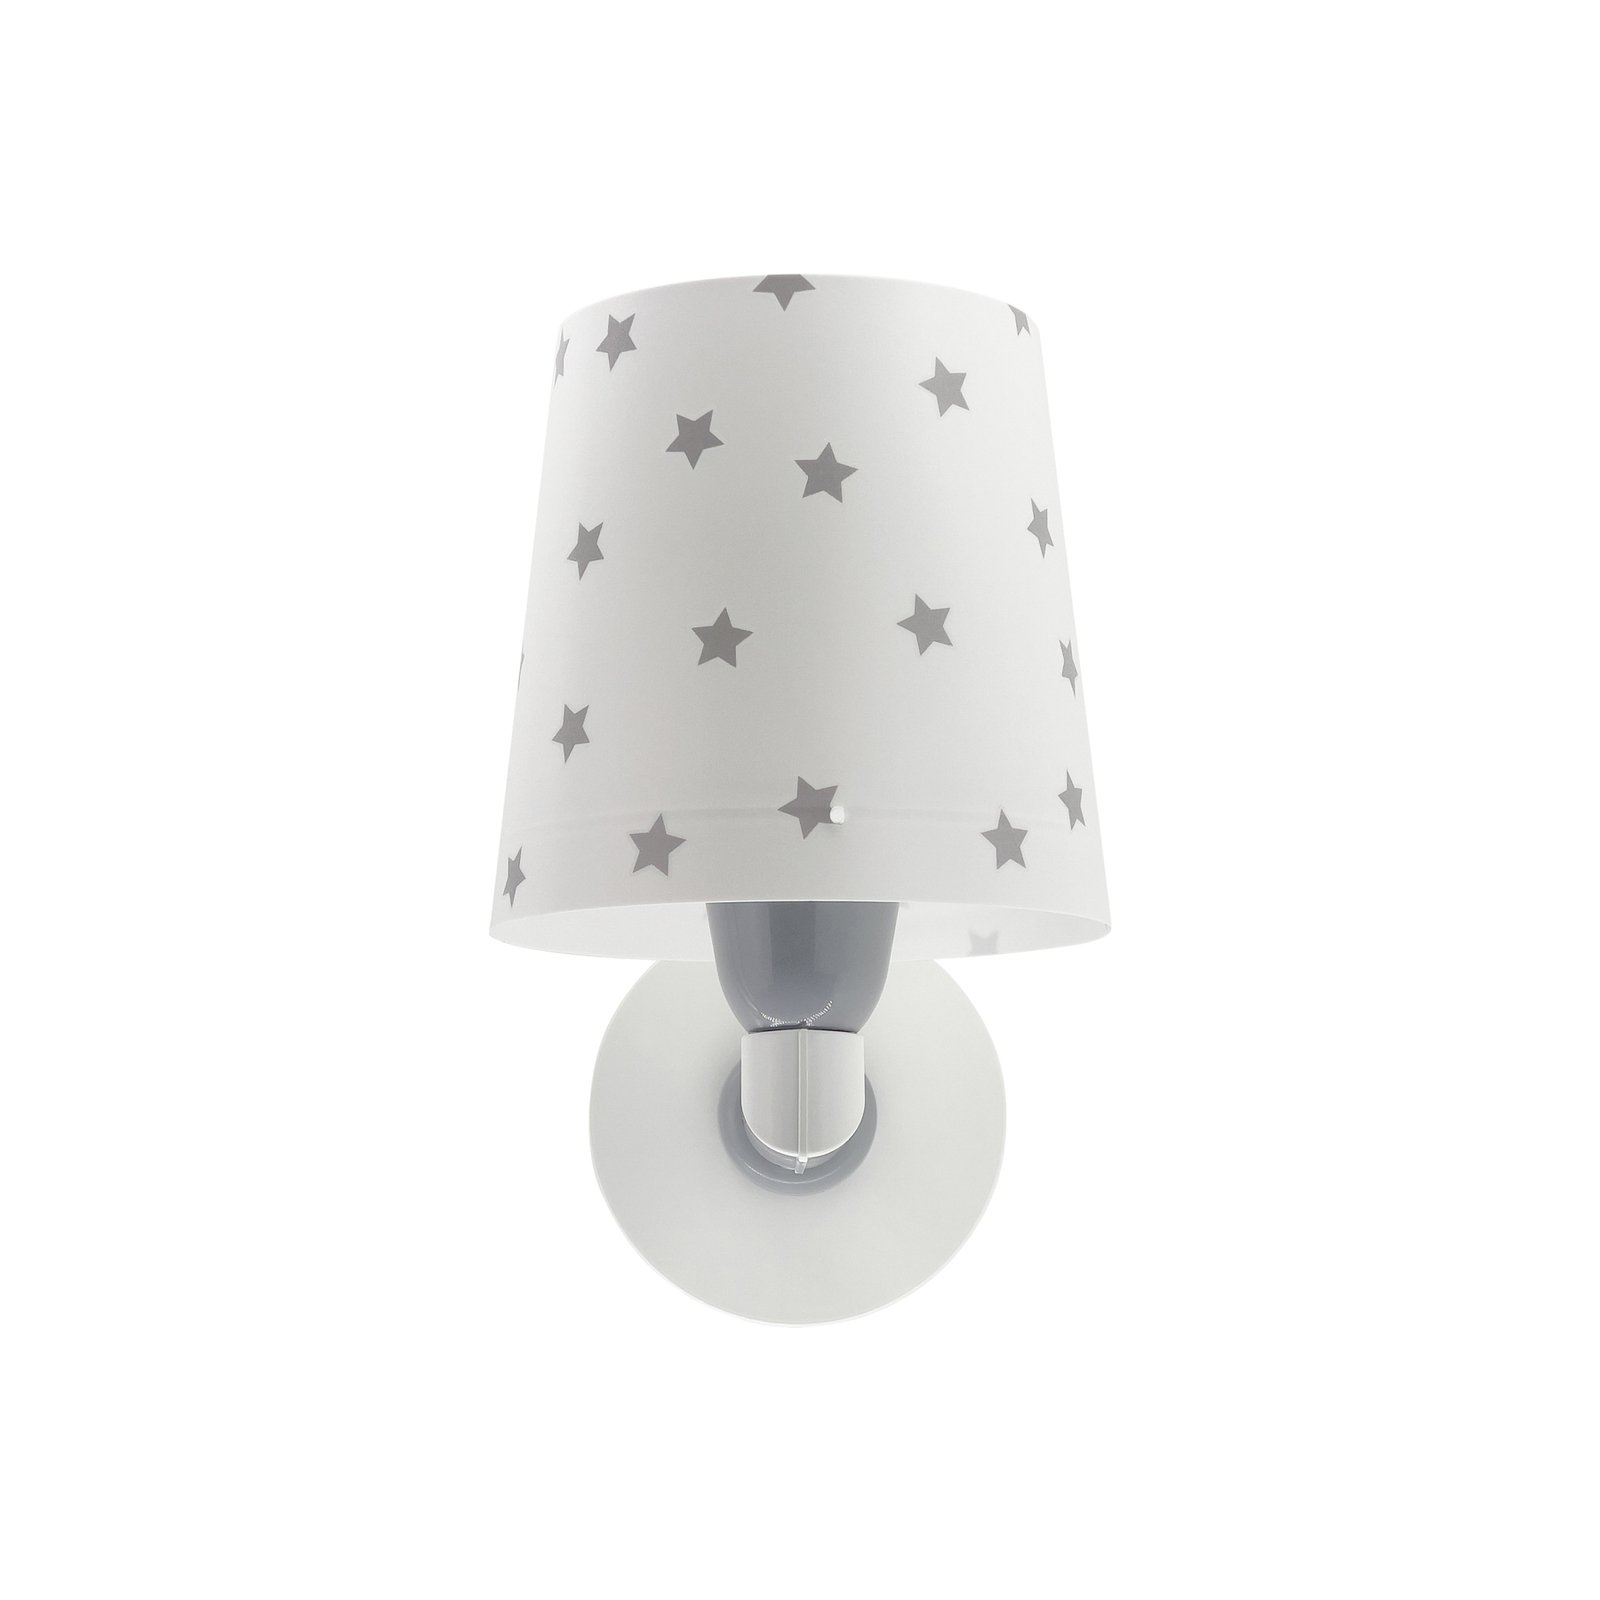 Dalber Star Light kinder-wandlamp wit